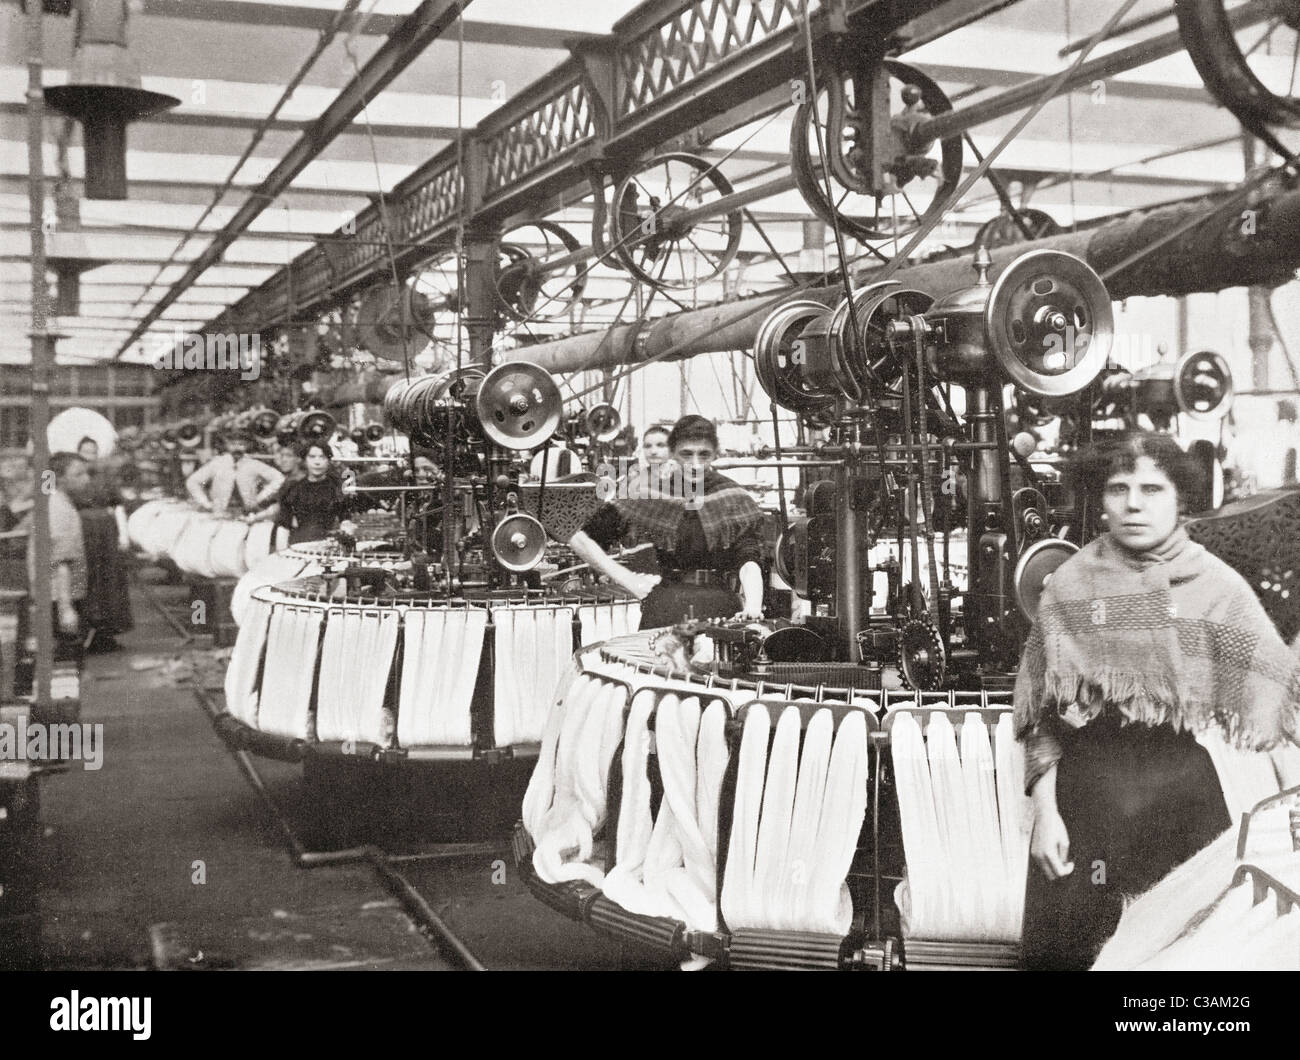 Smiths Woolcombing arbeiten, Bradford, West Yorkshire, England. Arbeiter im late19th Jahrhundert. Stockfoto